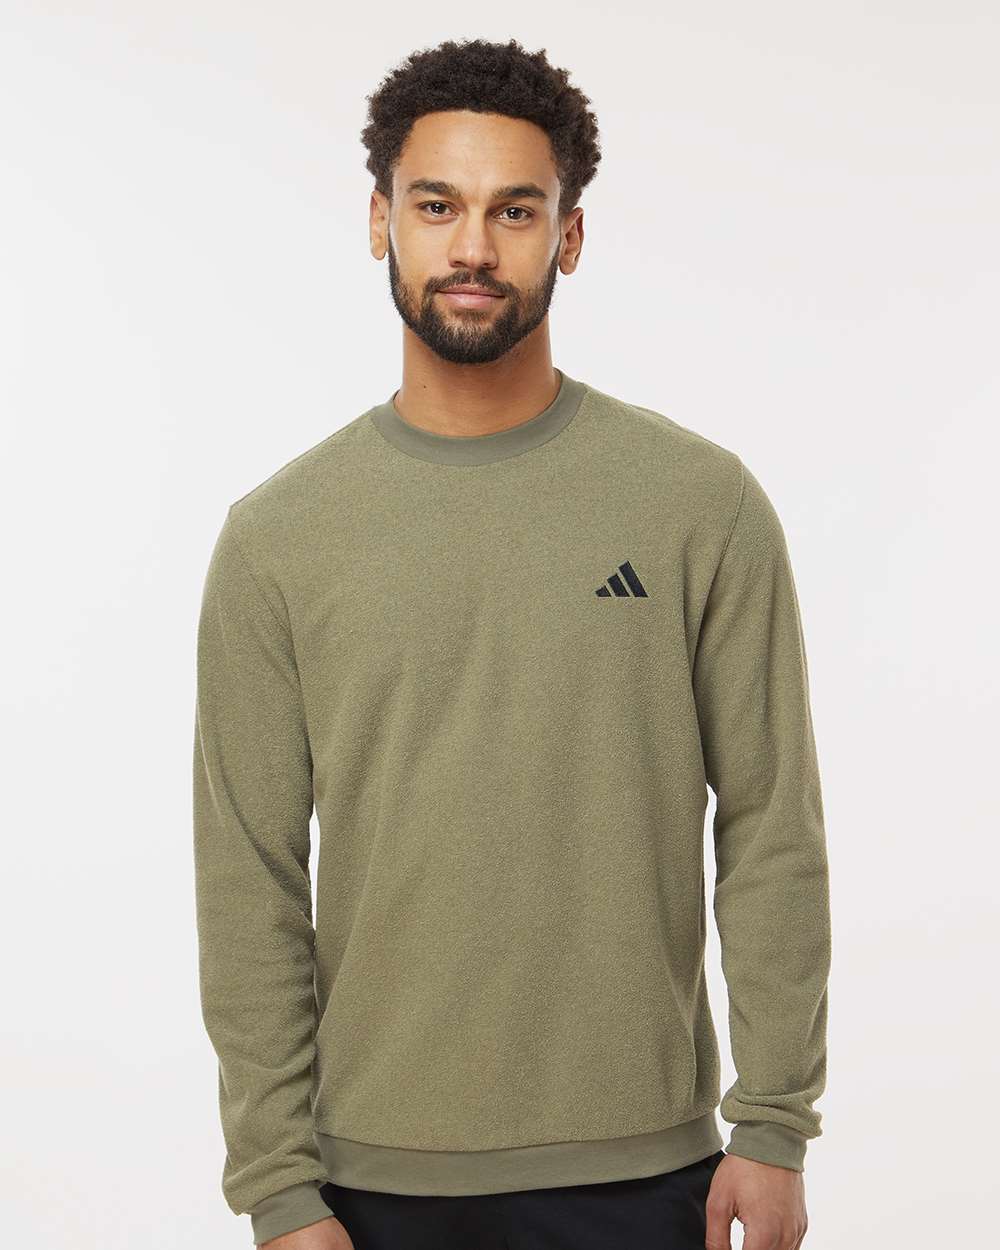 Adidas A586 Crewneck Sweatshirt #colormdl_Olive Strata